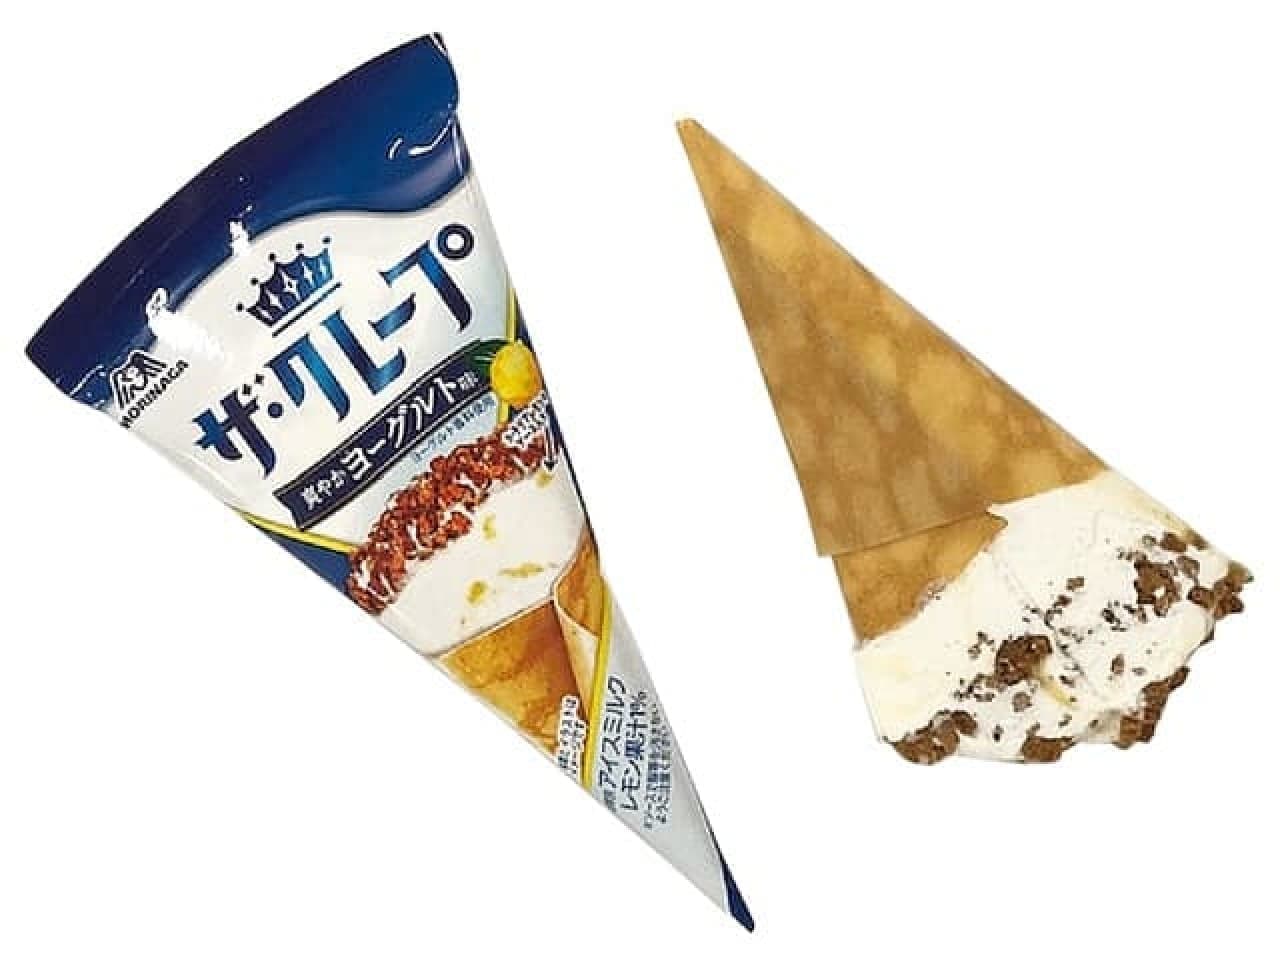 7-ELEVEN "Morinaga The Crepe Refreshing Yogurt Flavor